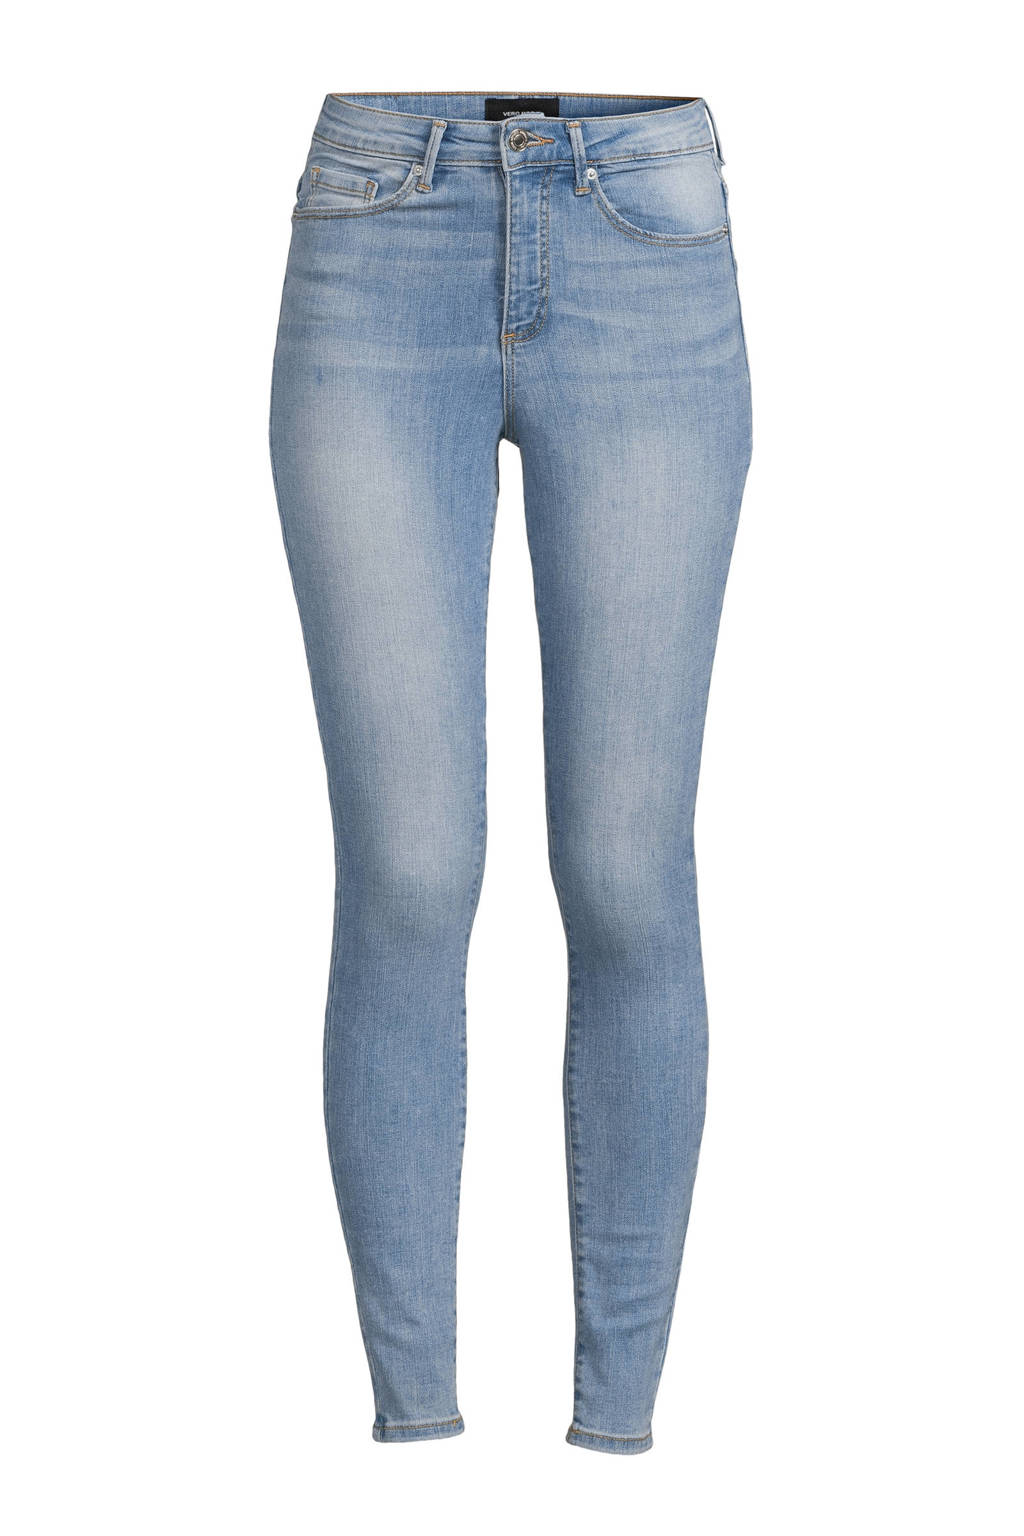 denim wehkamp waist VERO skinny light | VMSOPHIA high jeans blue MODA